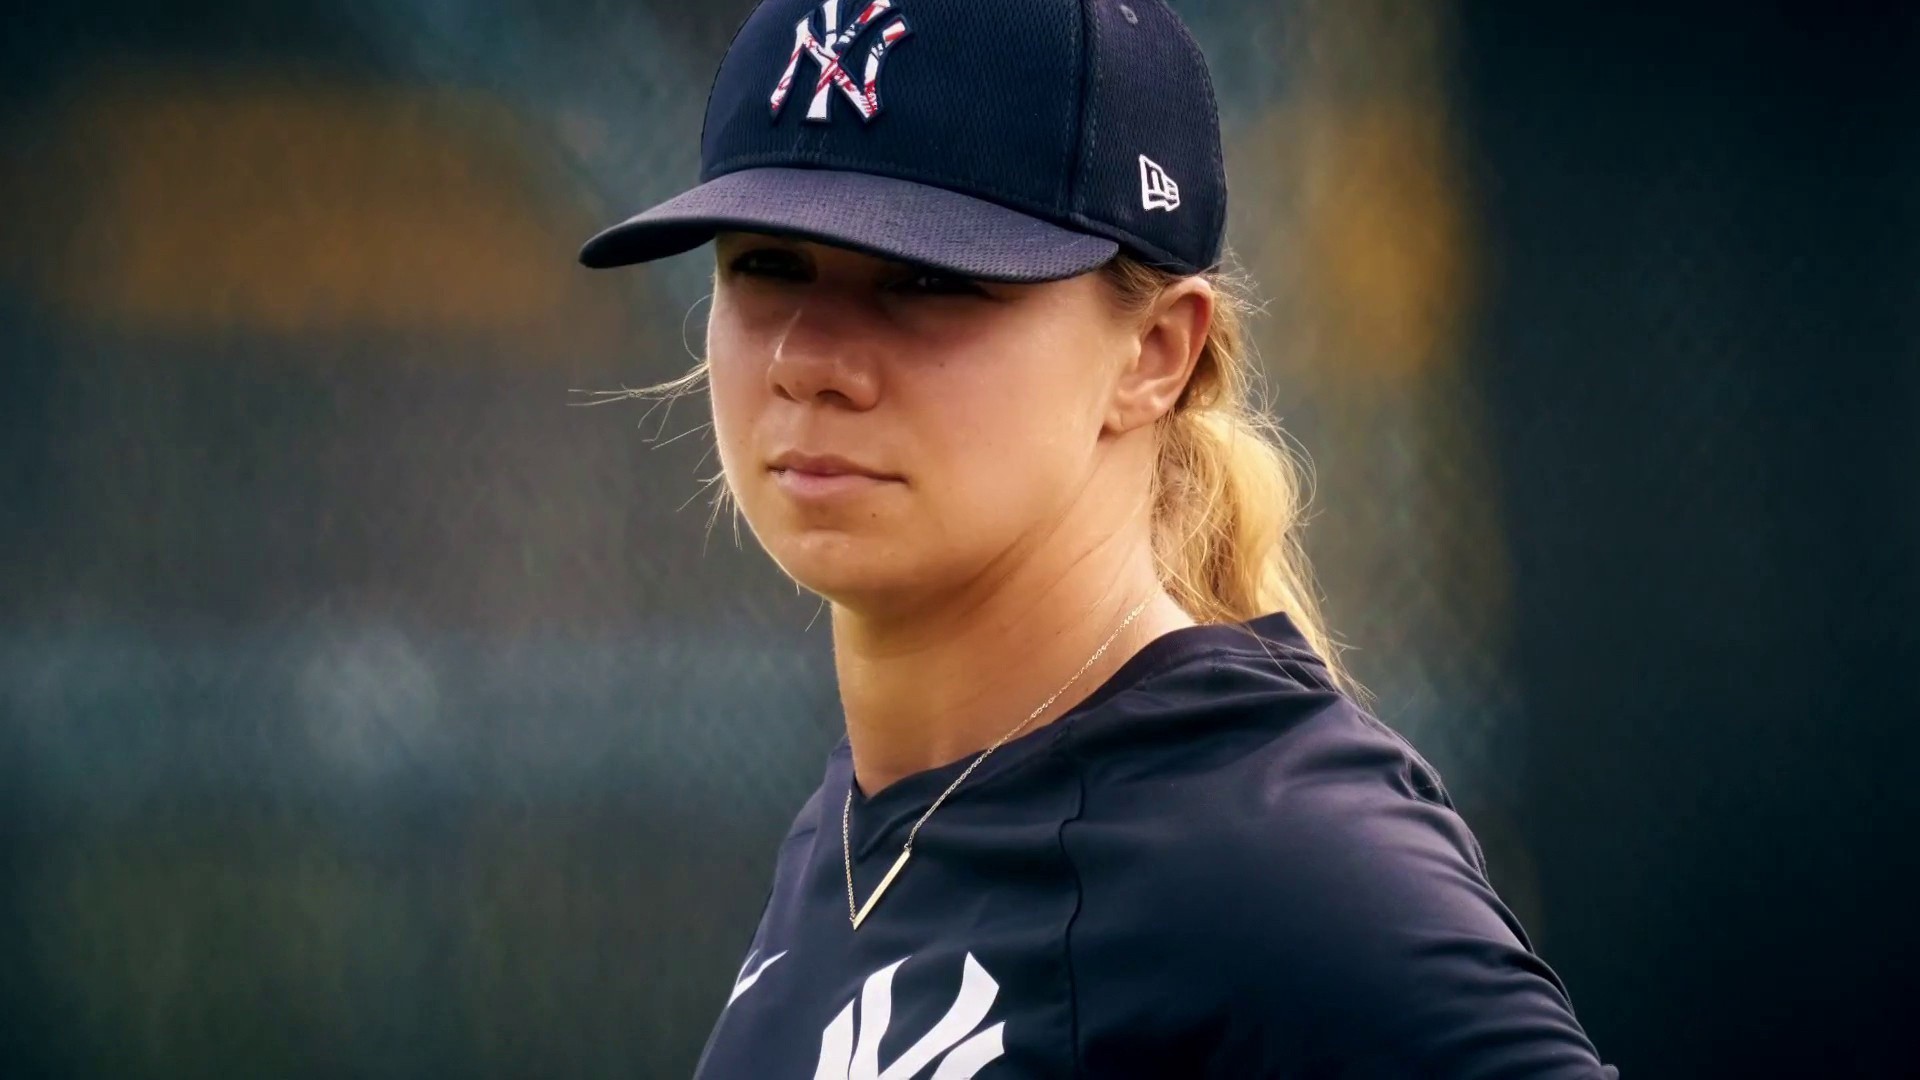 Rachel Balkovec wins debut managing Yankees minor league team